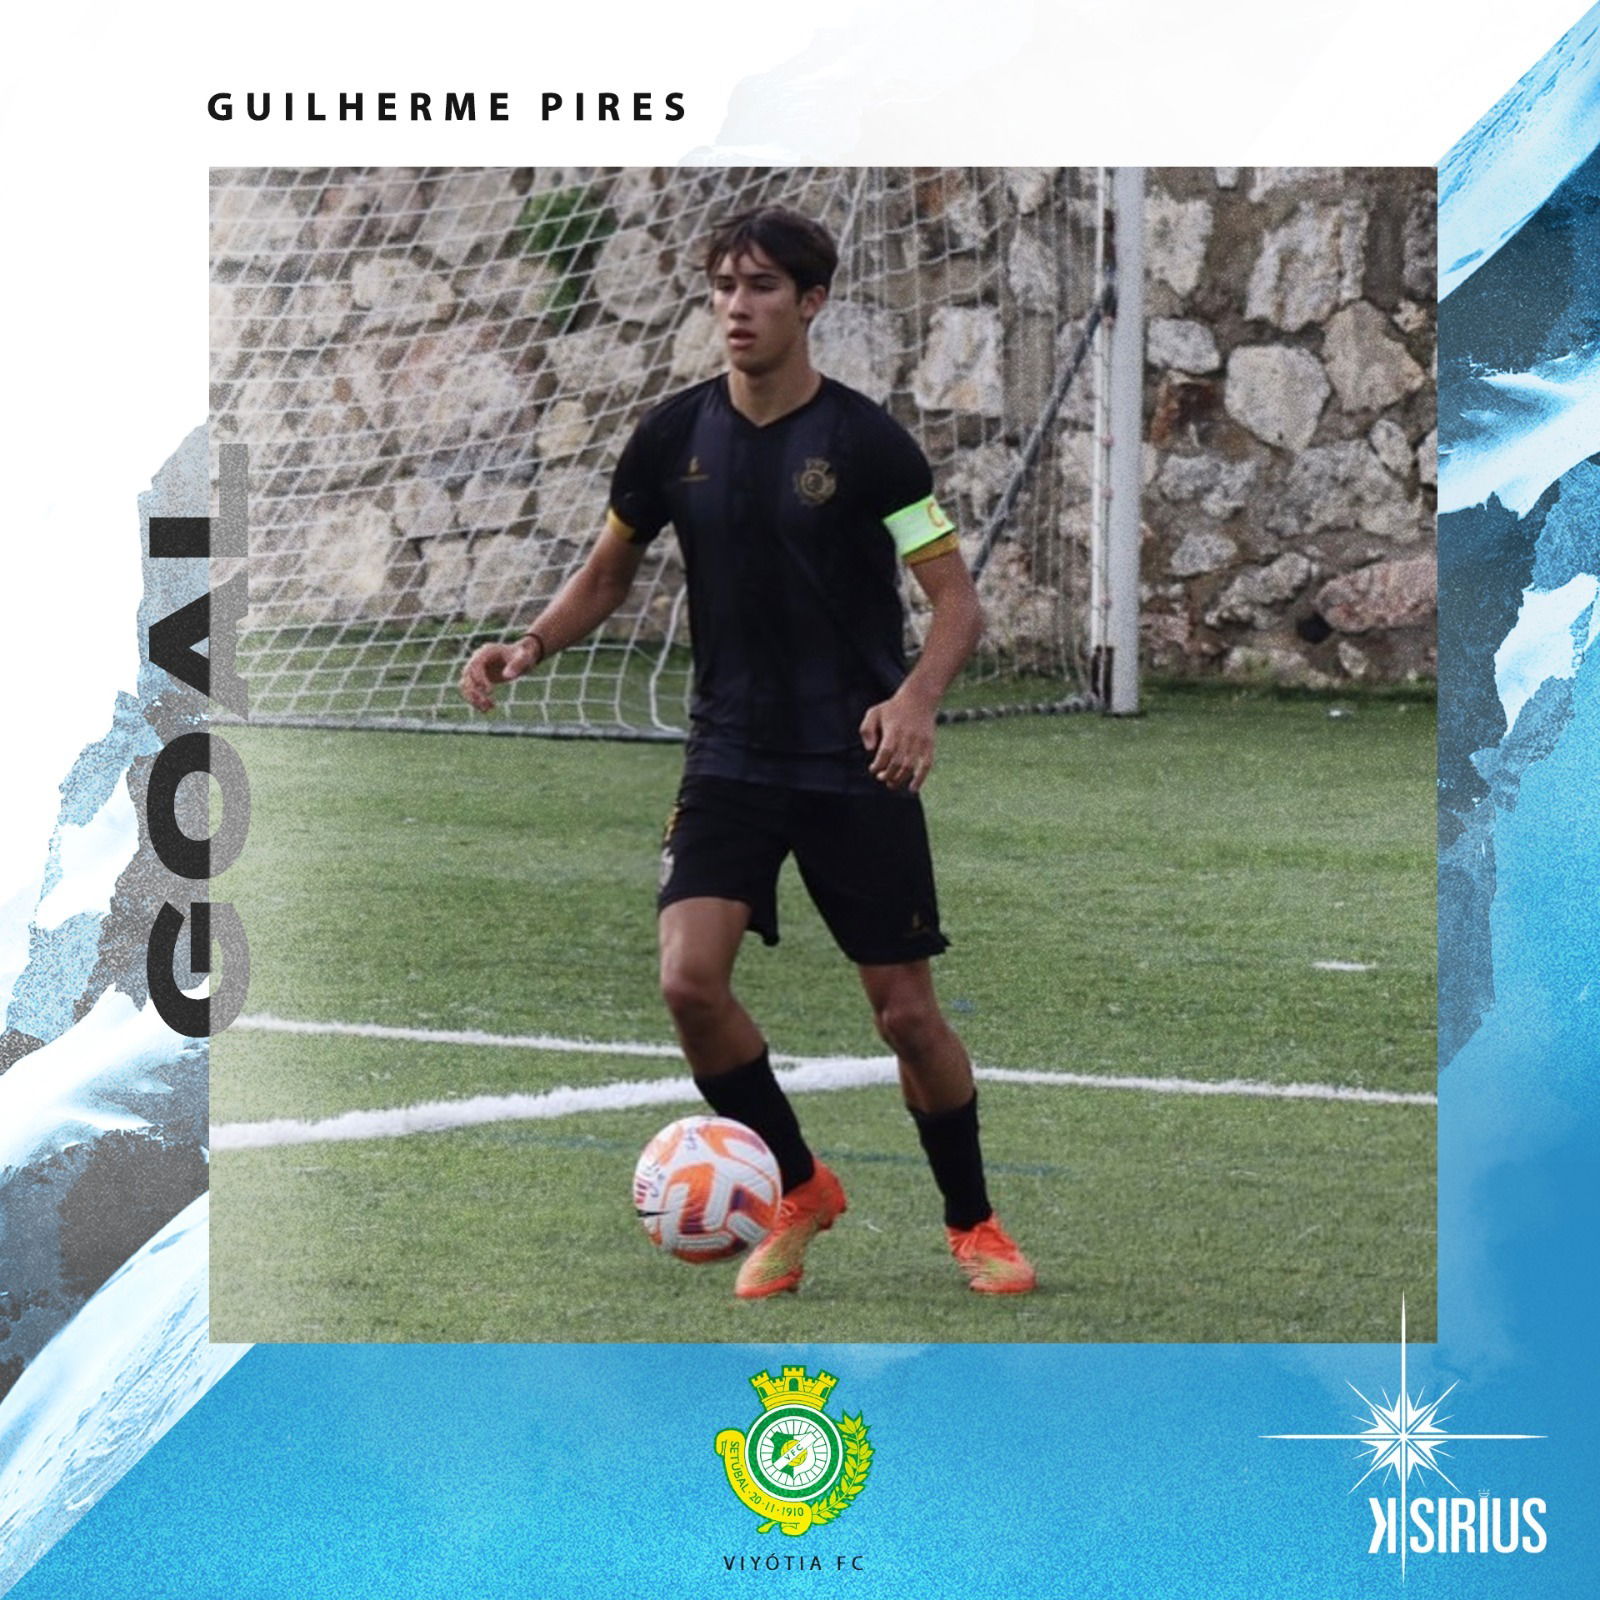 Goal: Guilherme Pires (Vitória FC)